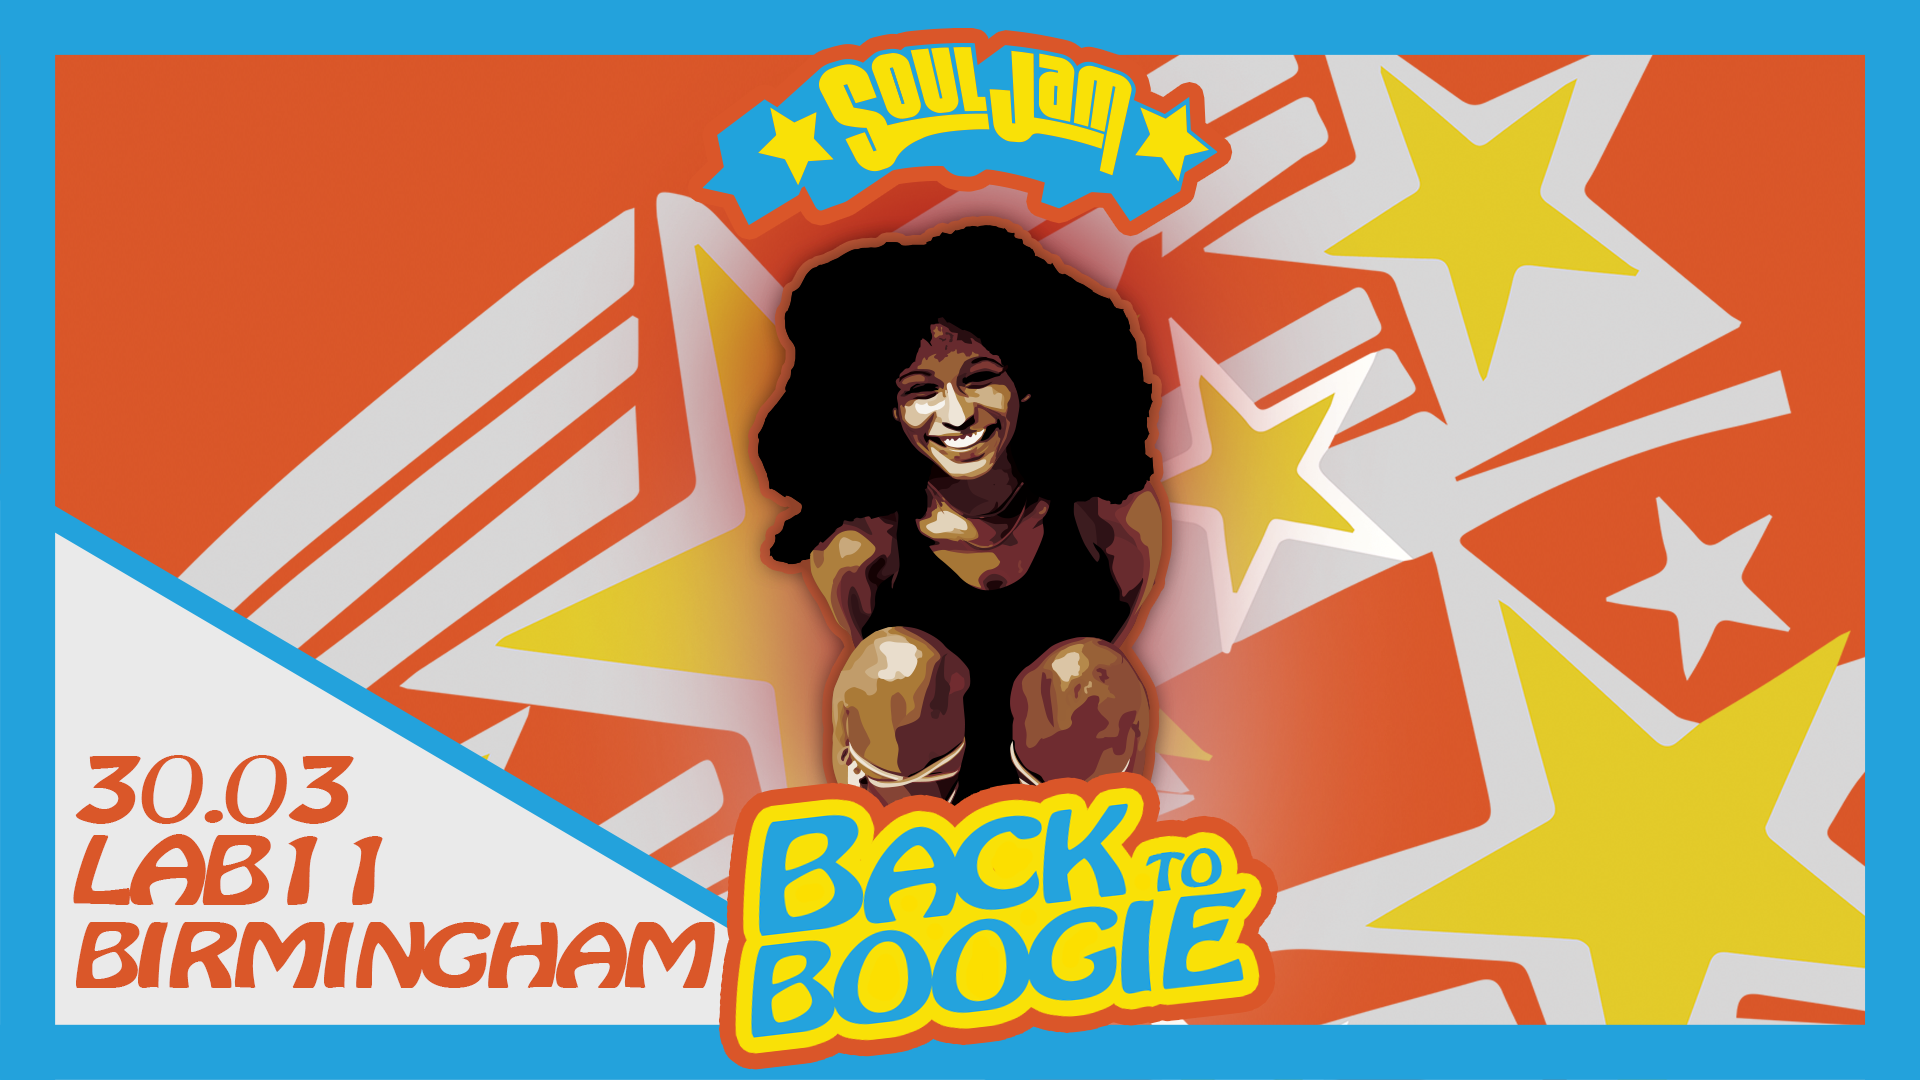 SoulJam | Back To Boogie | Lab11 | Birmingham